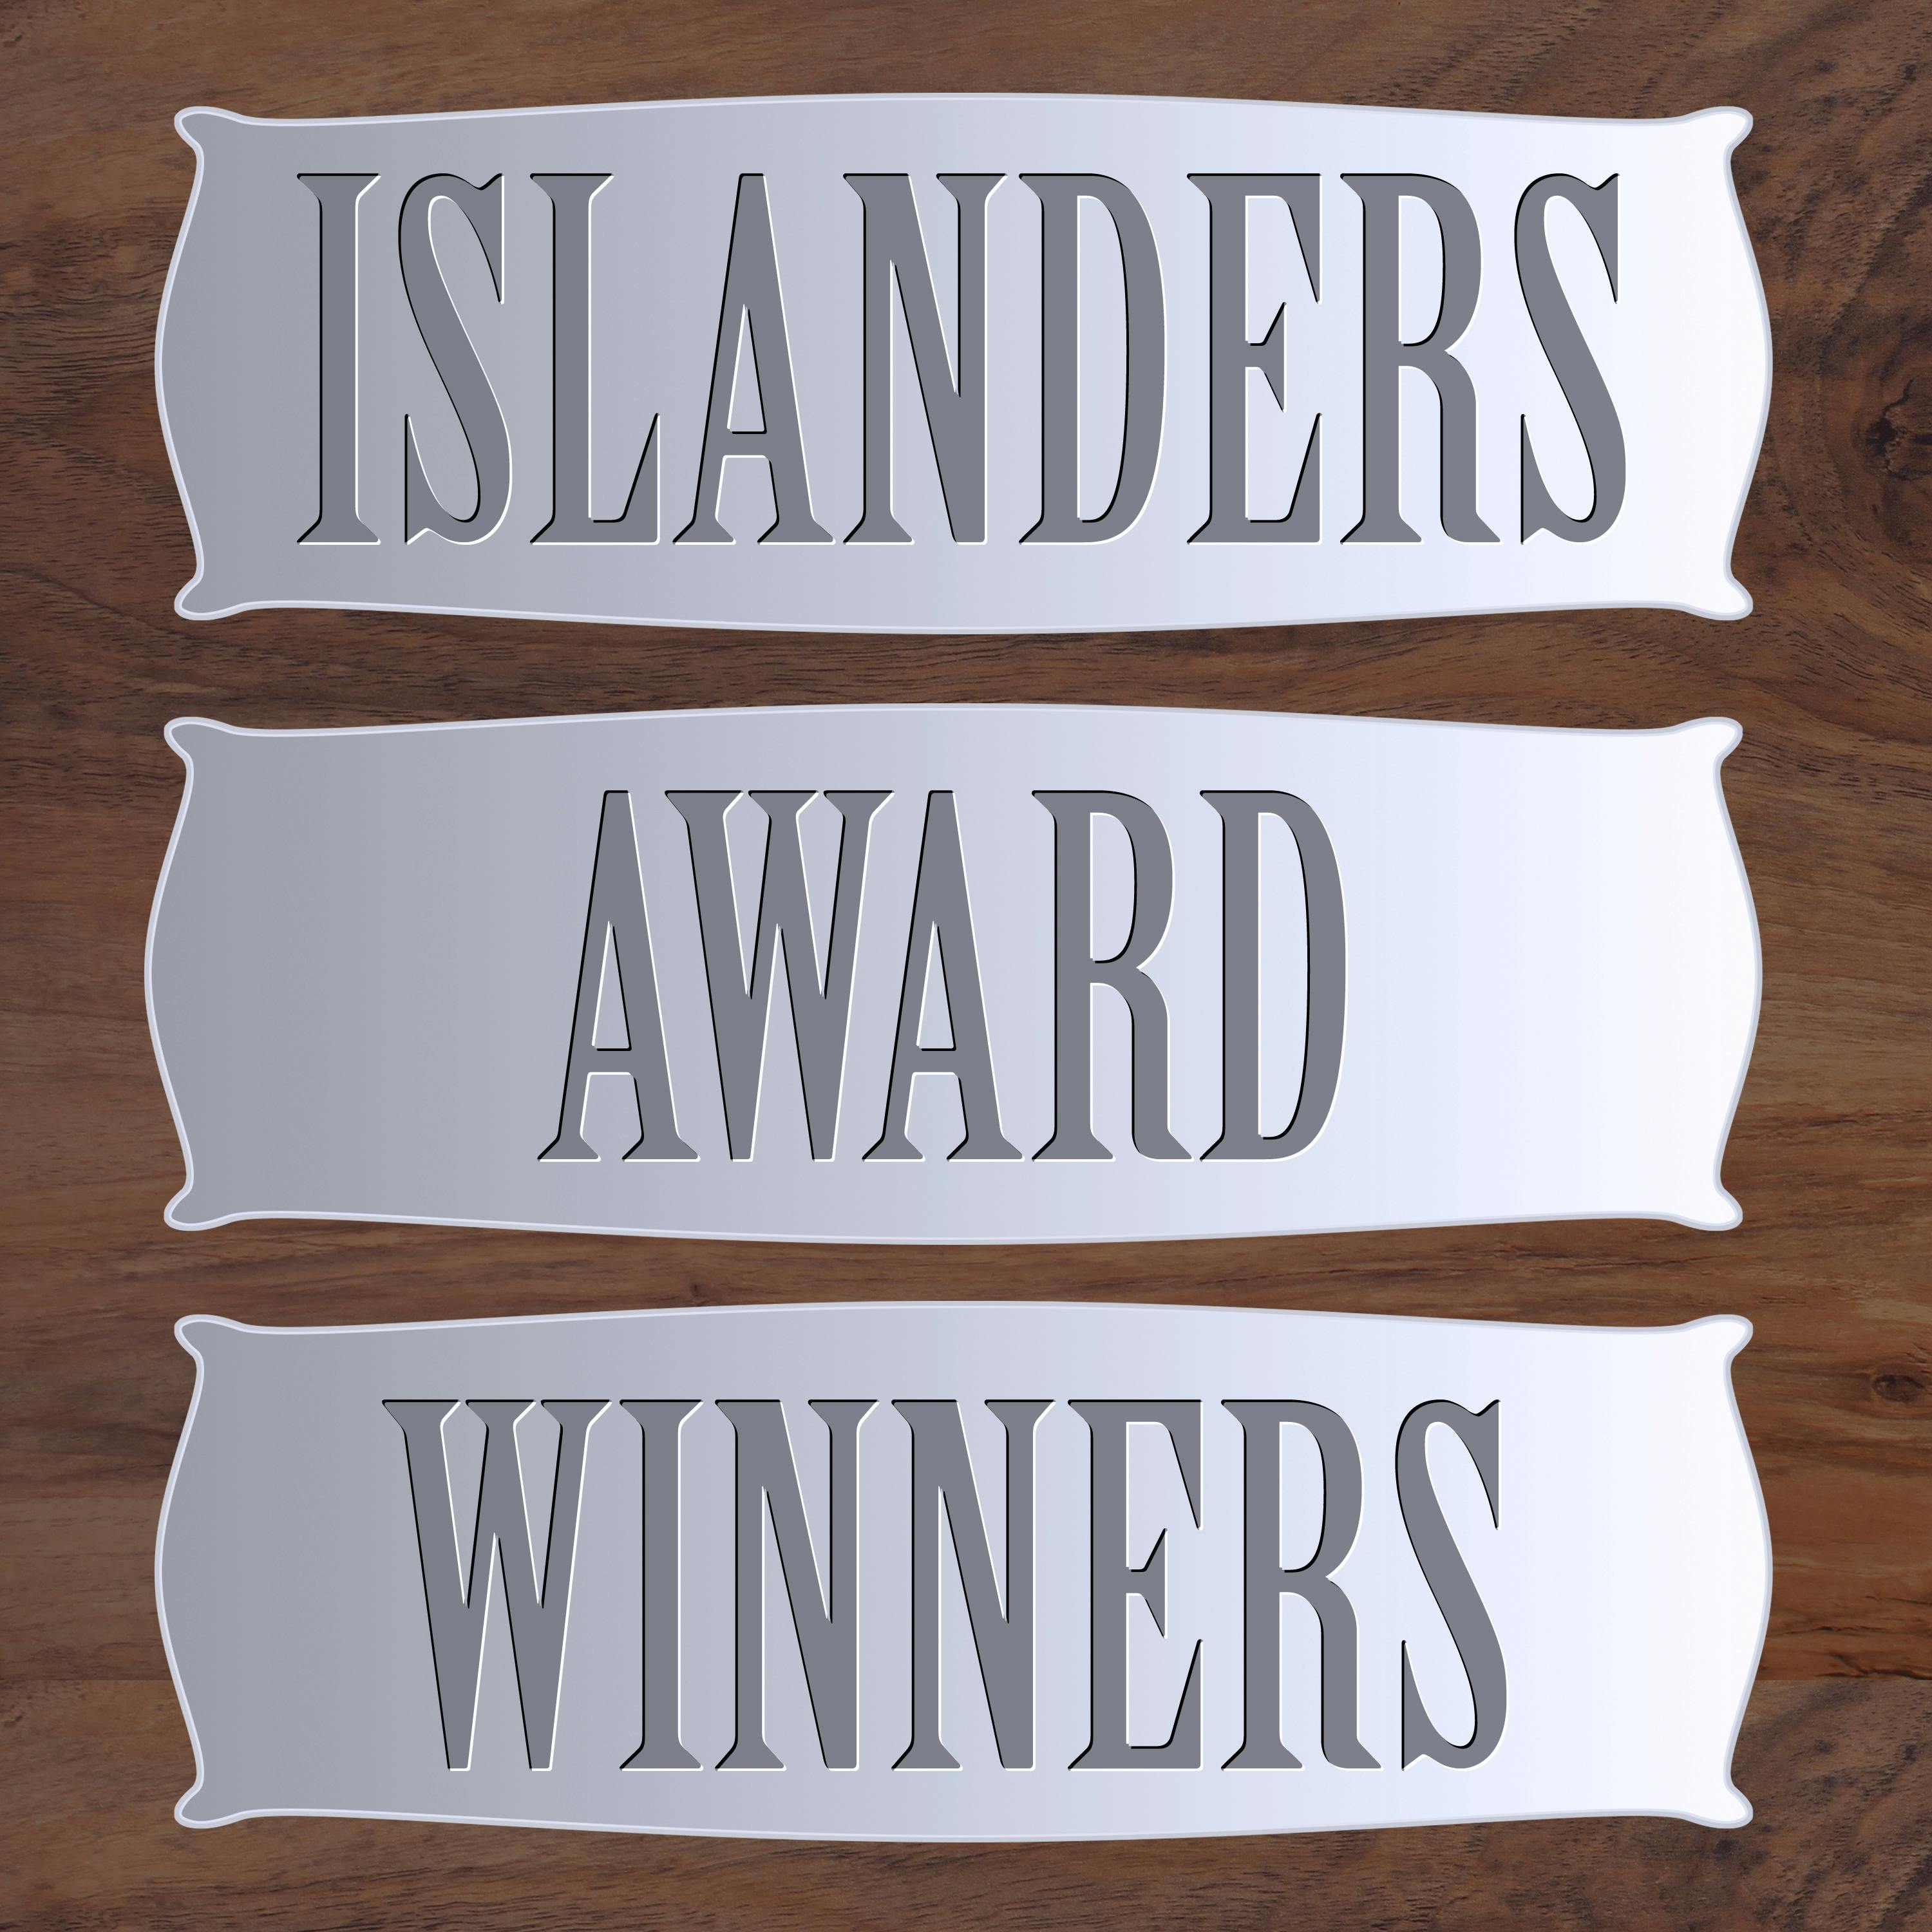 Islanders Award Winners: Mike Bossy, Calder Trophy, 1978 (Part 1)